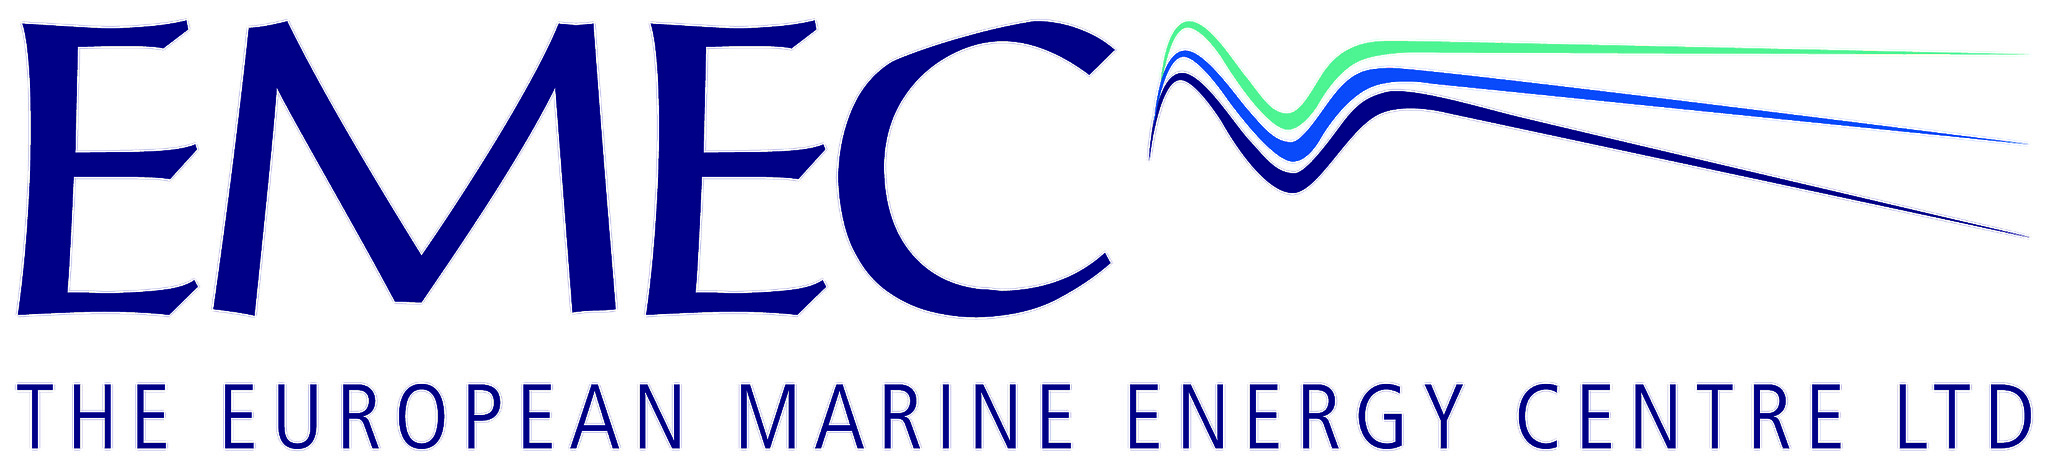 European Marine Energy Centre (EMEC) Ltd Logo